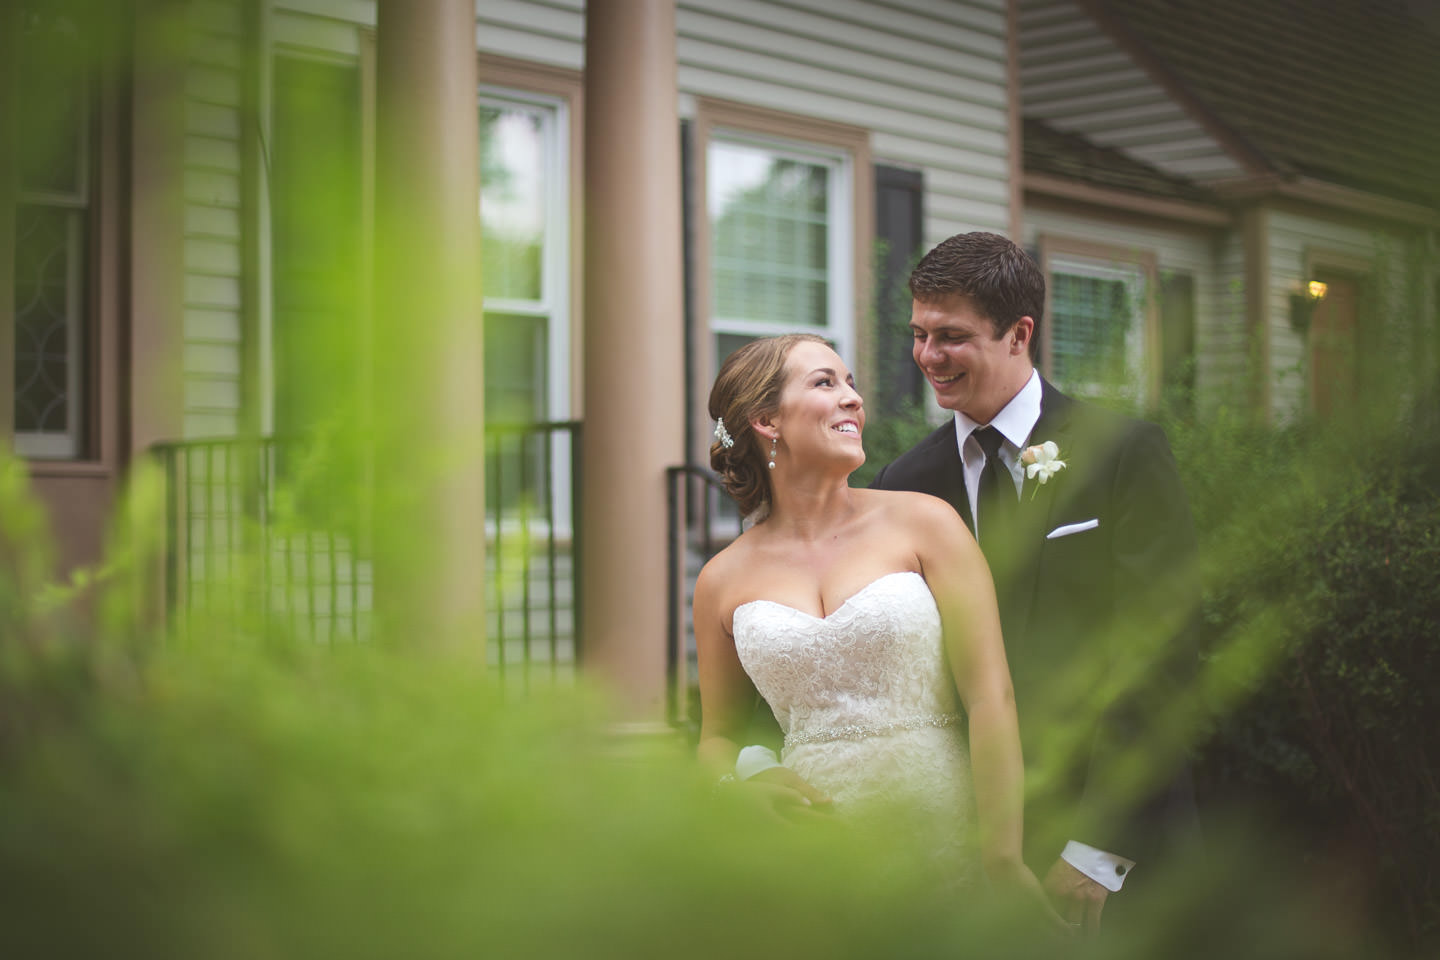 Dearborn-Wedding-The-Dearborn-Inn-Bride-Groom-Smile-At-House